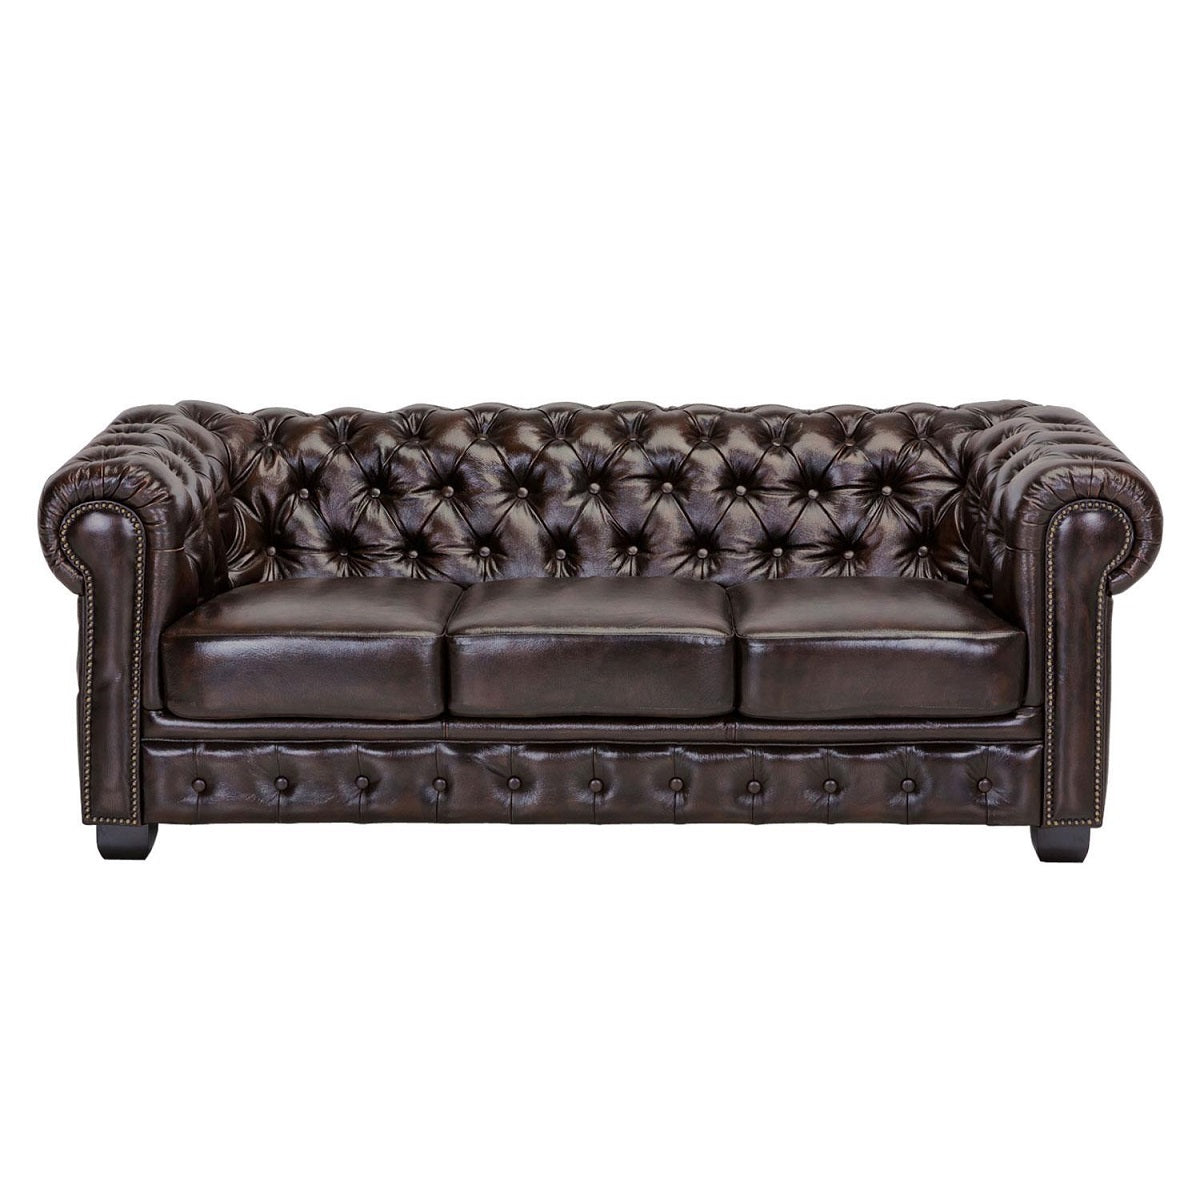 
                  
                    Sofa 3-sitzer Leder / Rindsleder antik braun Vintage Chesterfield
                  
                